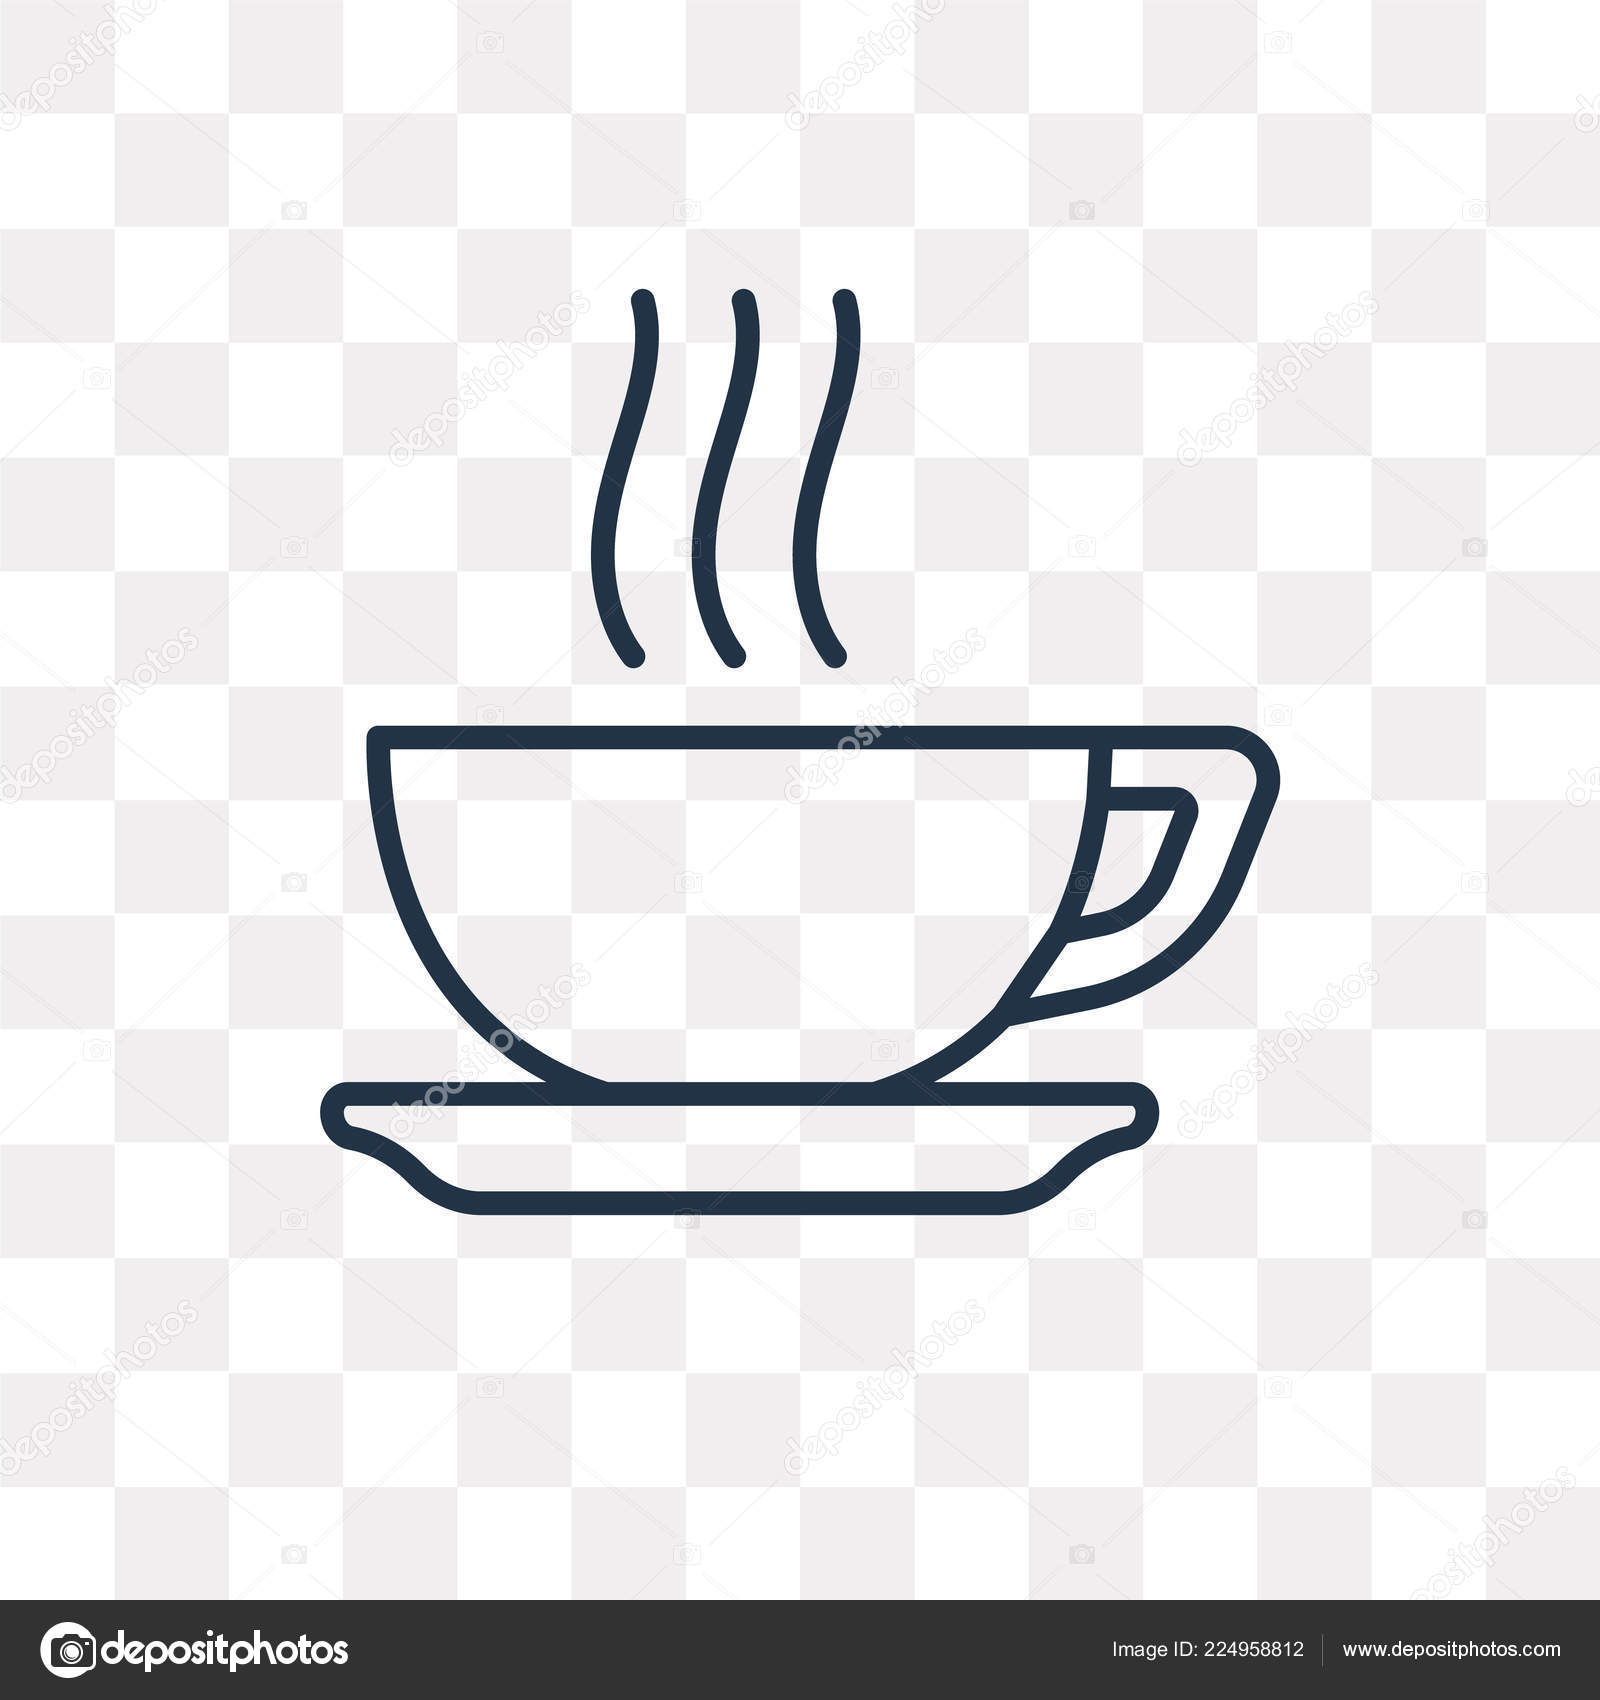 https://st4.depositphotos.com/18673546/22495/v/1600/depositphotos_224958812-stock-illustration-coffee-cup-vector-outline-icon.jpg